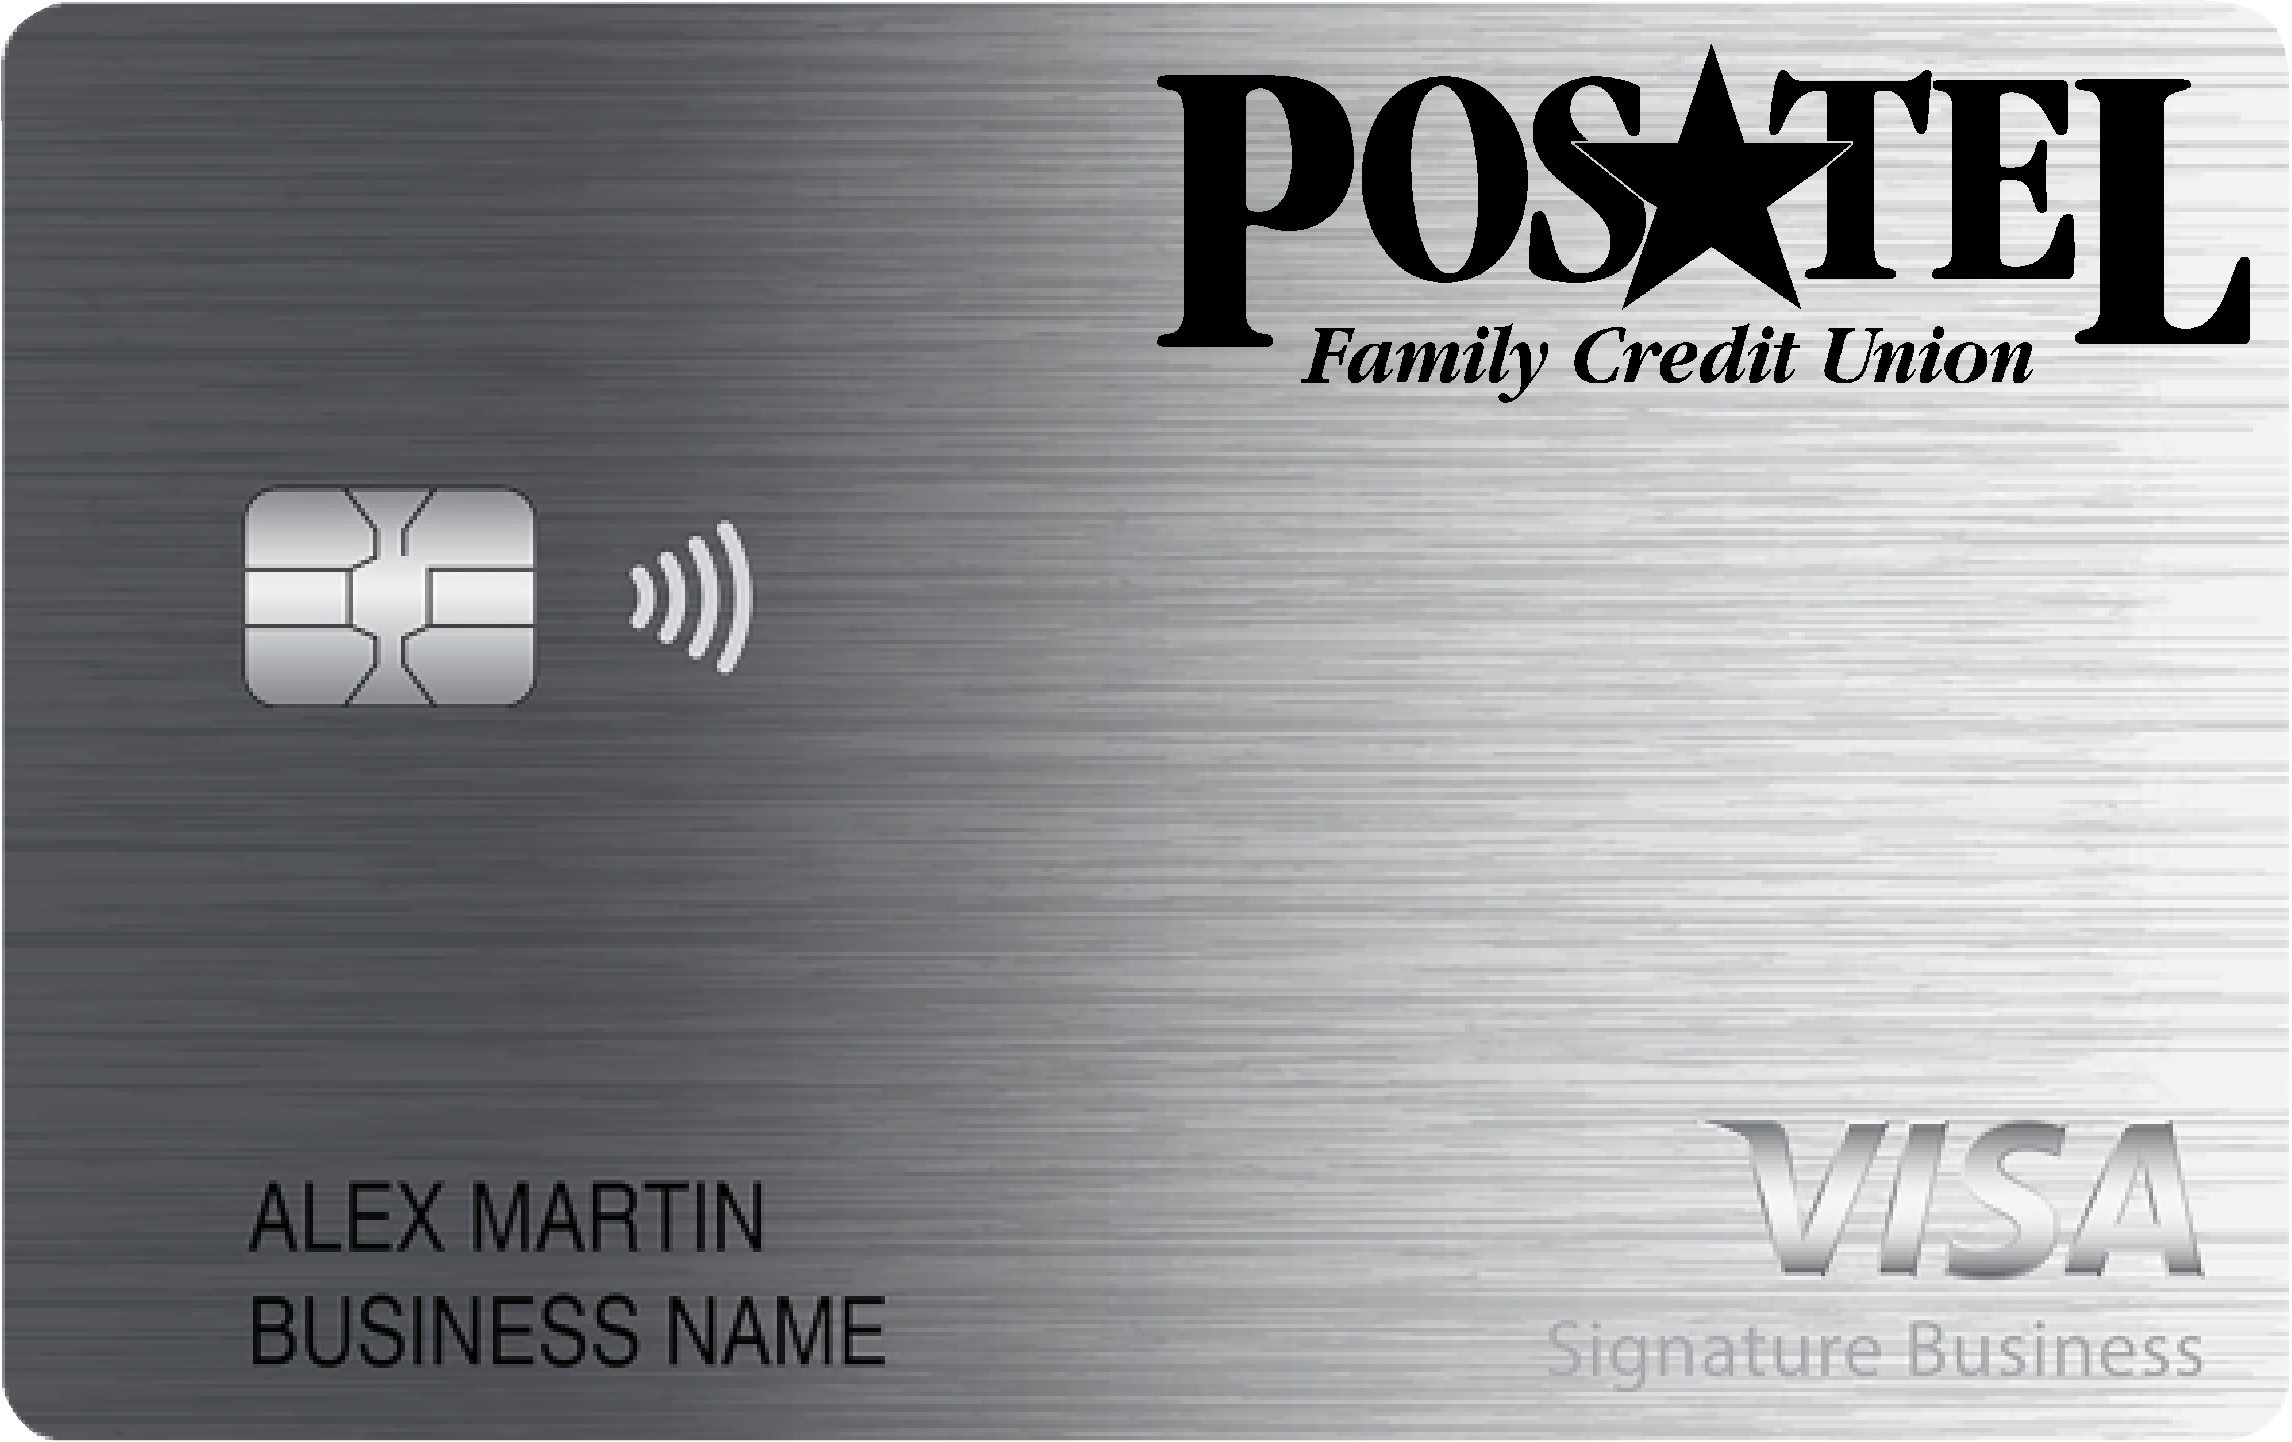 Postel Family Credit Union Smart Business Rewards Card